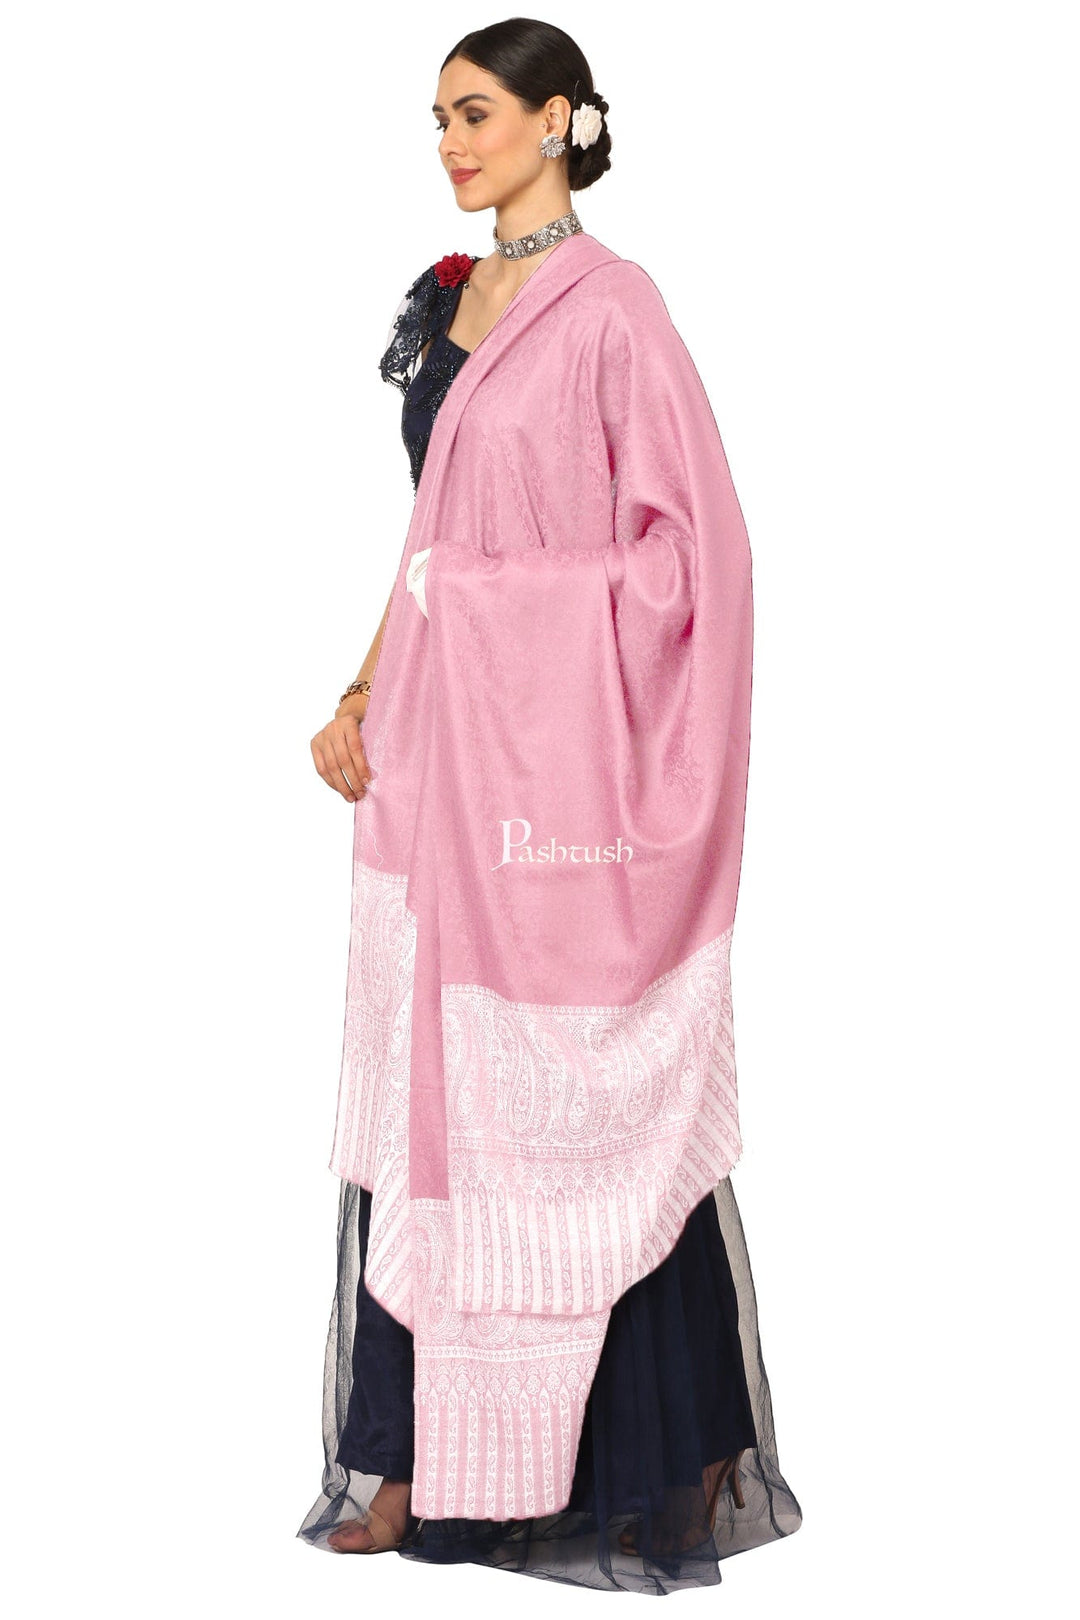 Pashtush India Womens Shawls Pashtush Women's Wool Ultra Soft Fine Wool Cashmere Blended Shawl